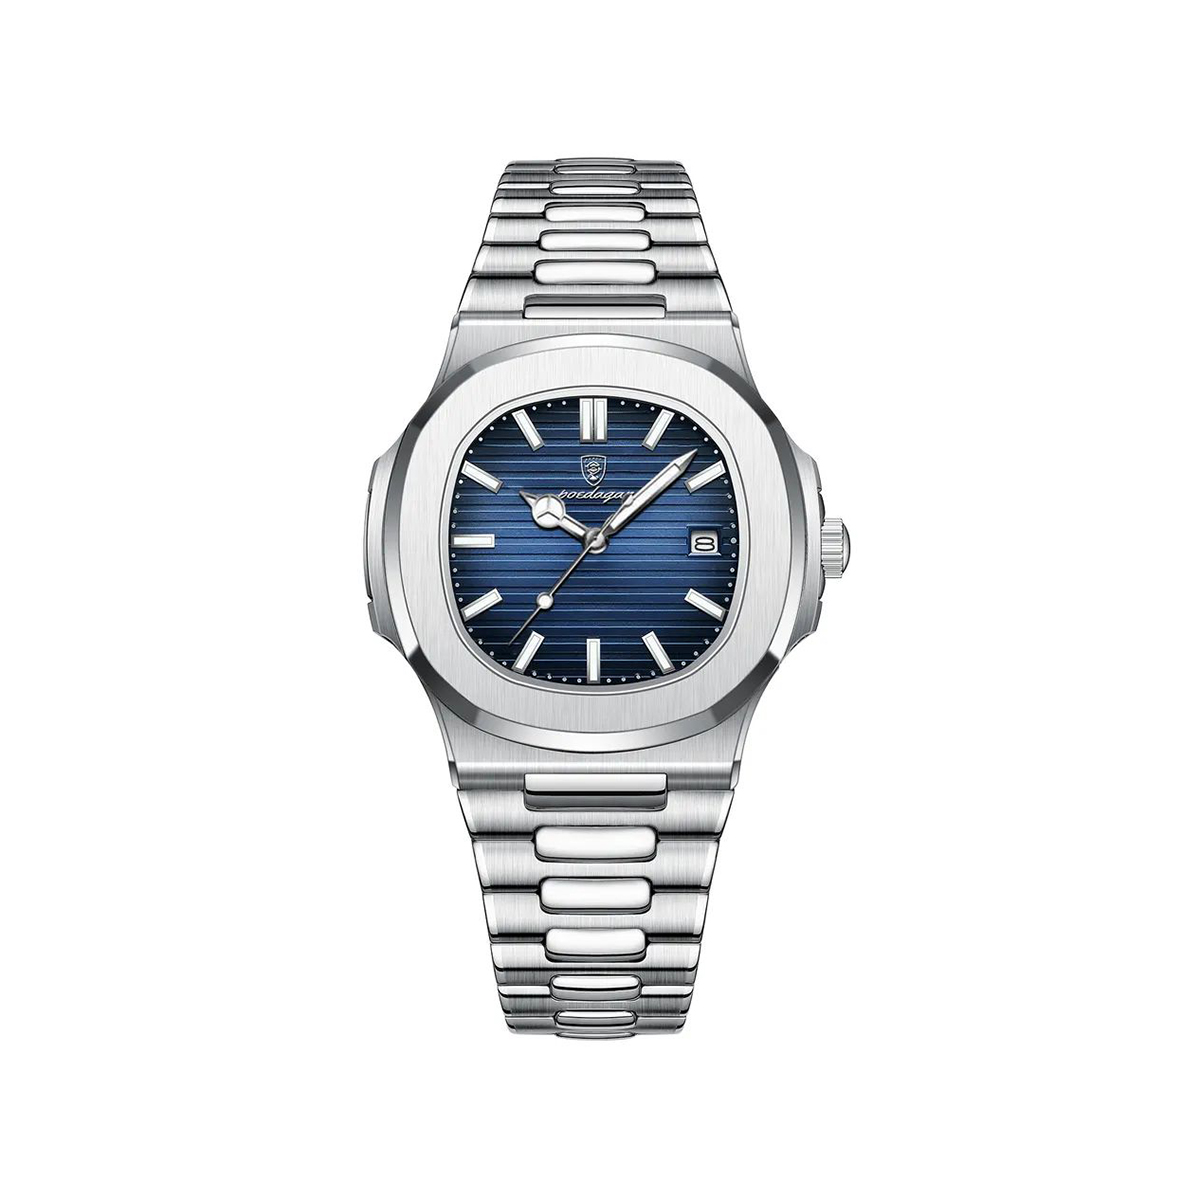 Poedagar 613 Business Quartz Luxury Stainless Steel Luminous Watch for Men- Silver Blue